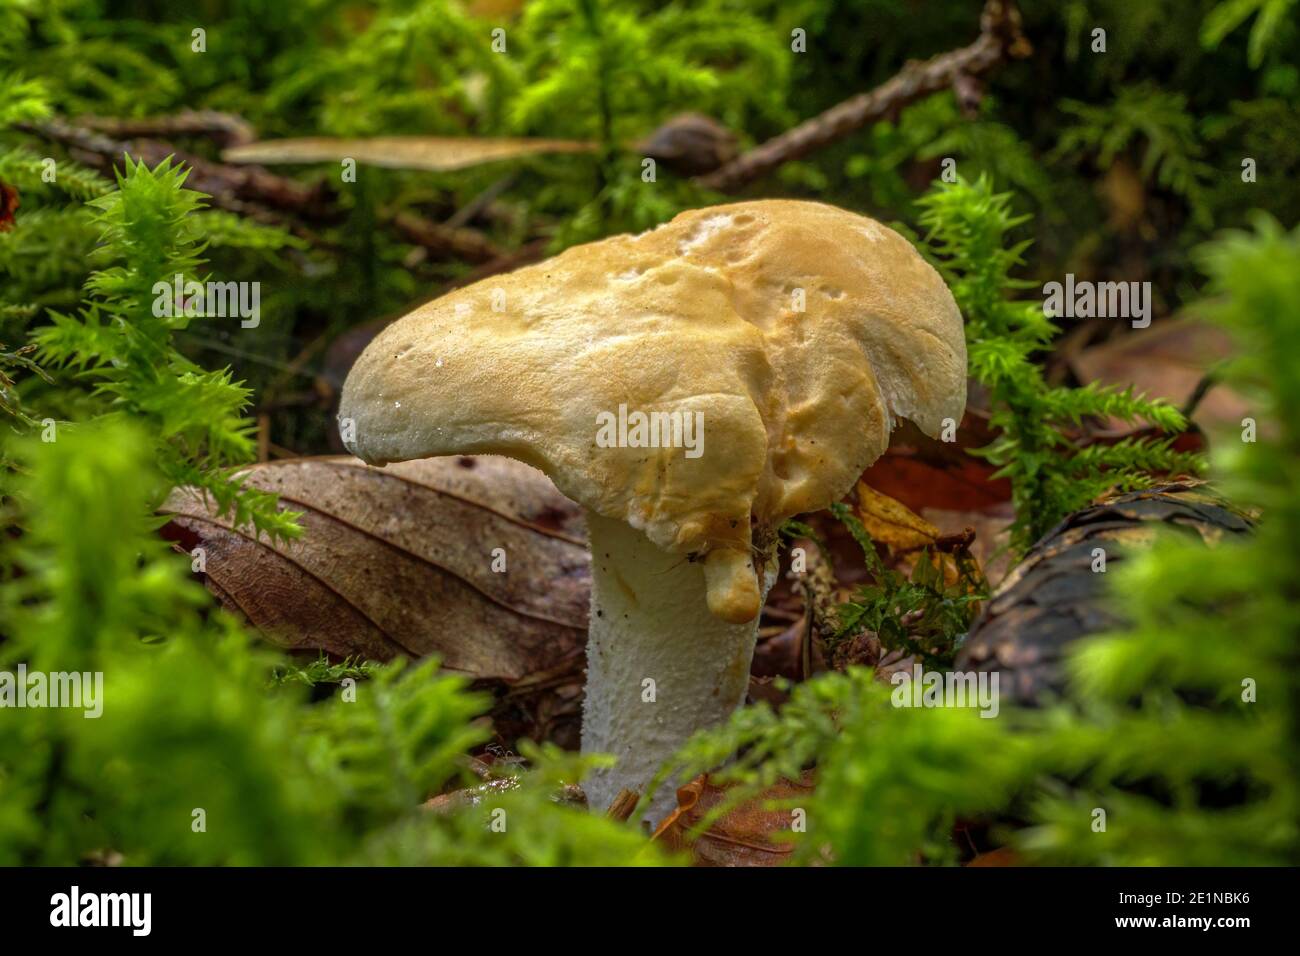 Fungus in the forest, Wood Hedgehog mushroom or Hydnum repandum, delicious edible mushroom, Bavaria, Germany, Europe Stock Photo